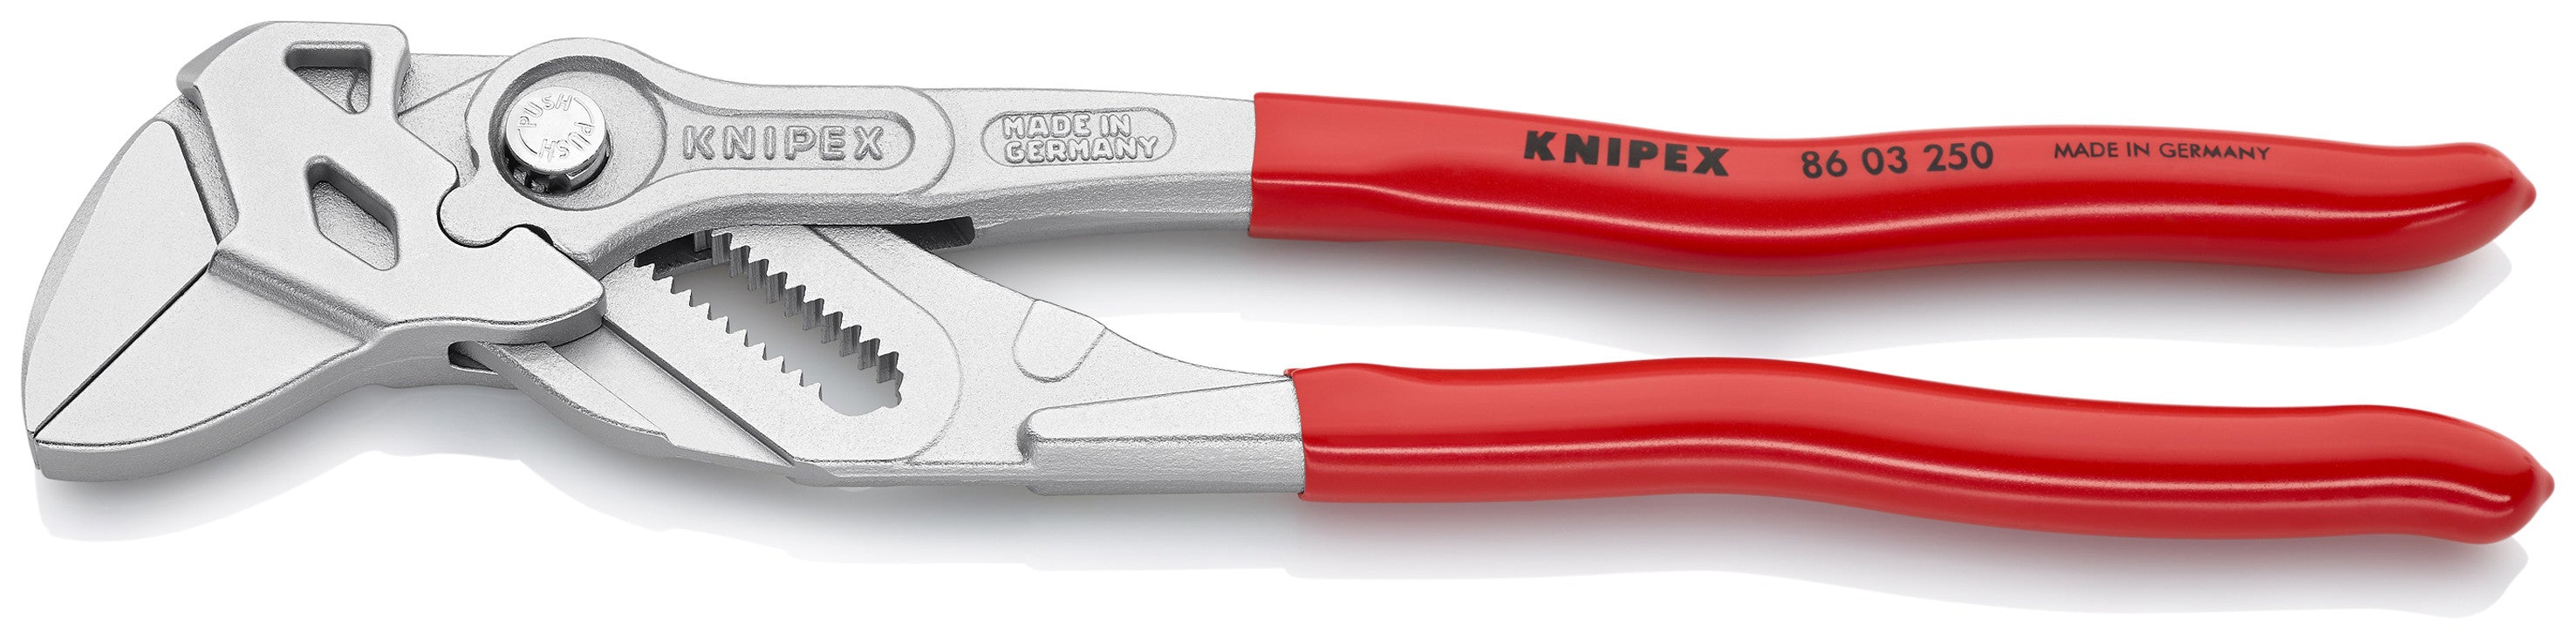 Knipex pinza/chiave art.86.03 mm 250 KNIPEX-WERK